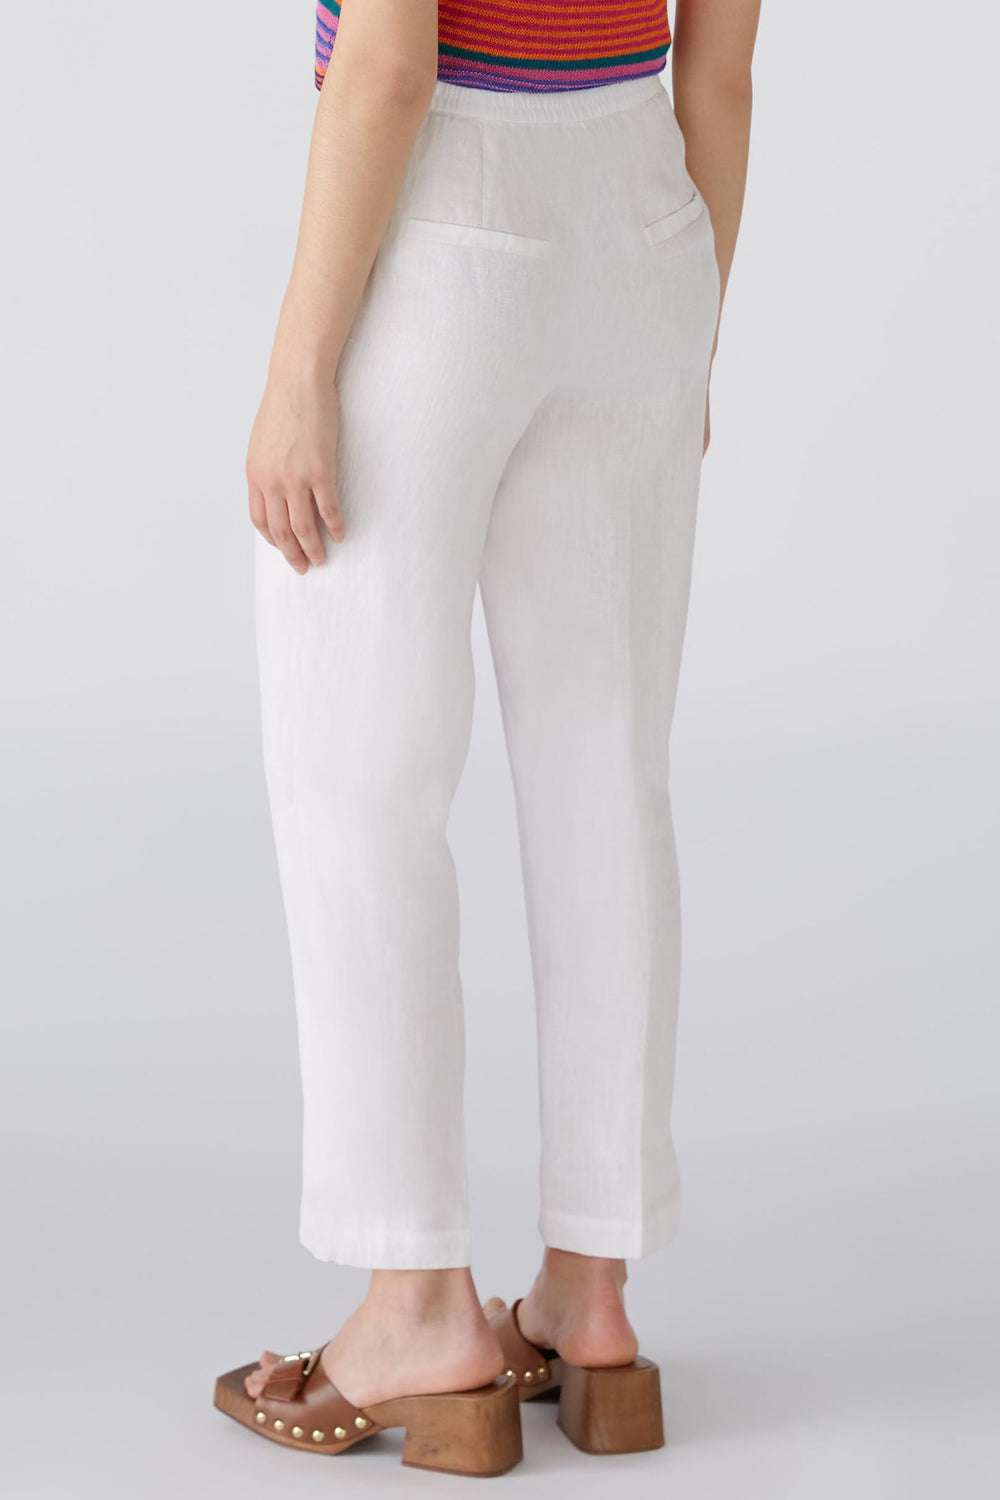 Oui 87573 White Linen Trousers - Olivia Grace Fashion